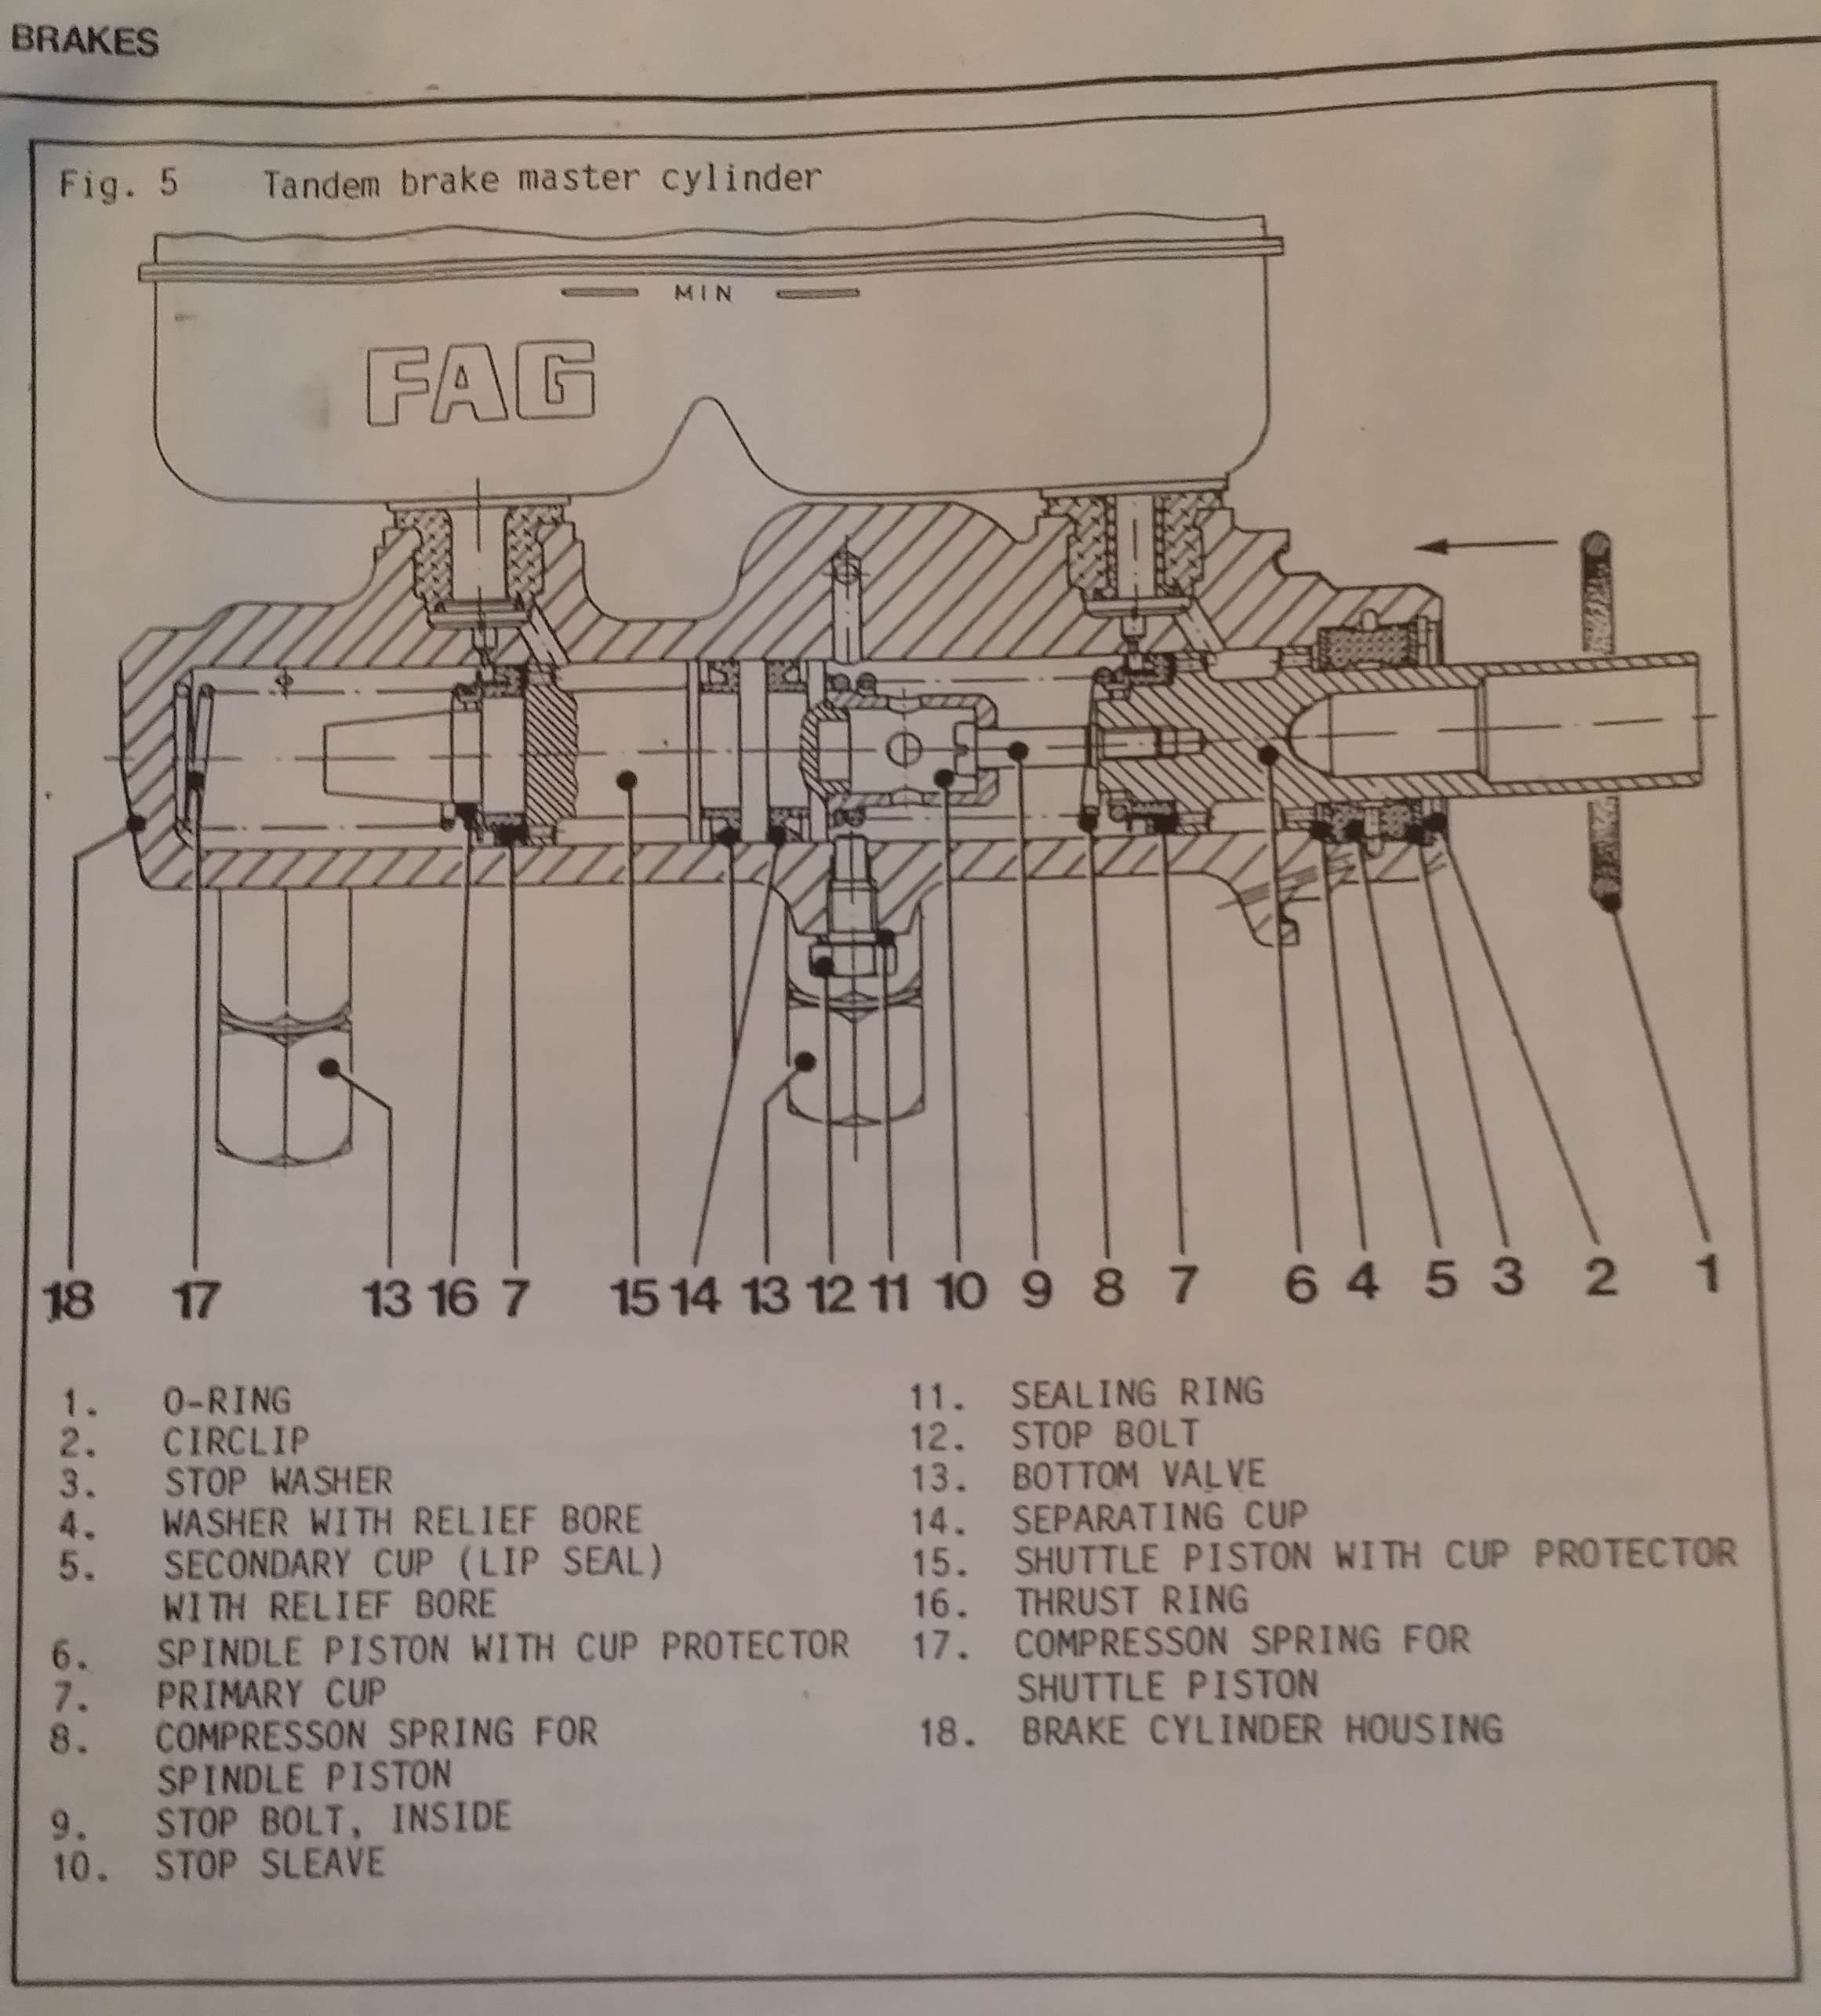 Master Cylinder Manual.jpg